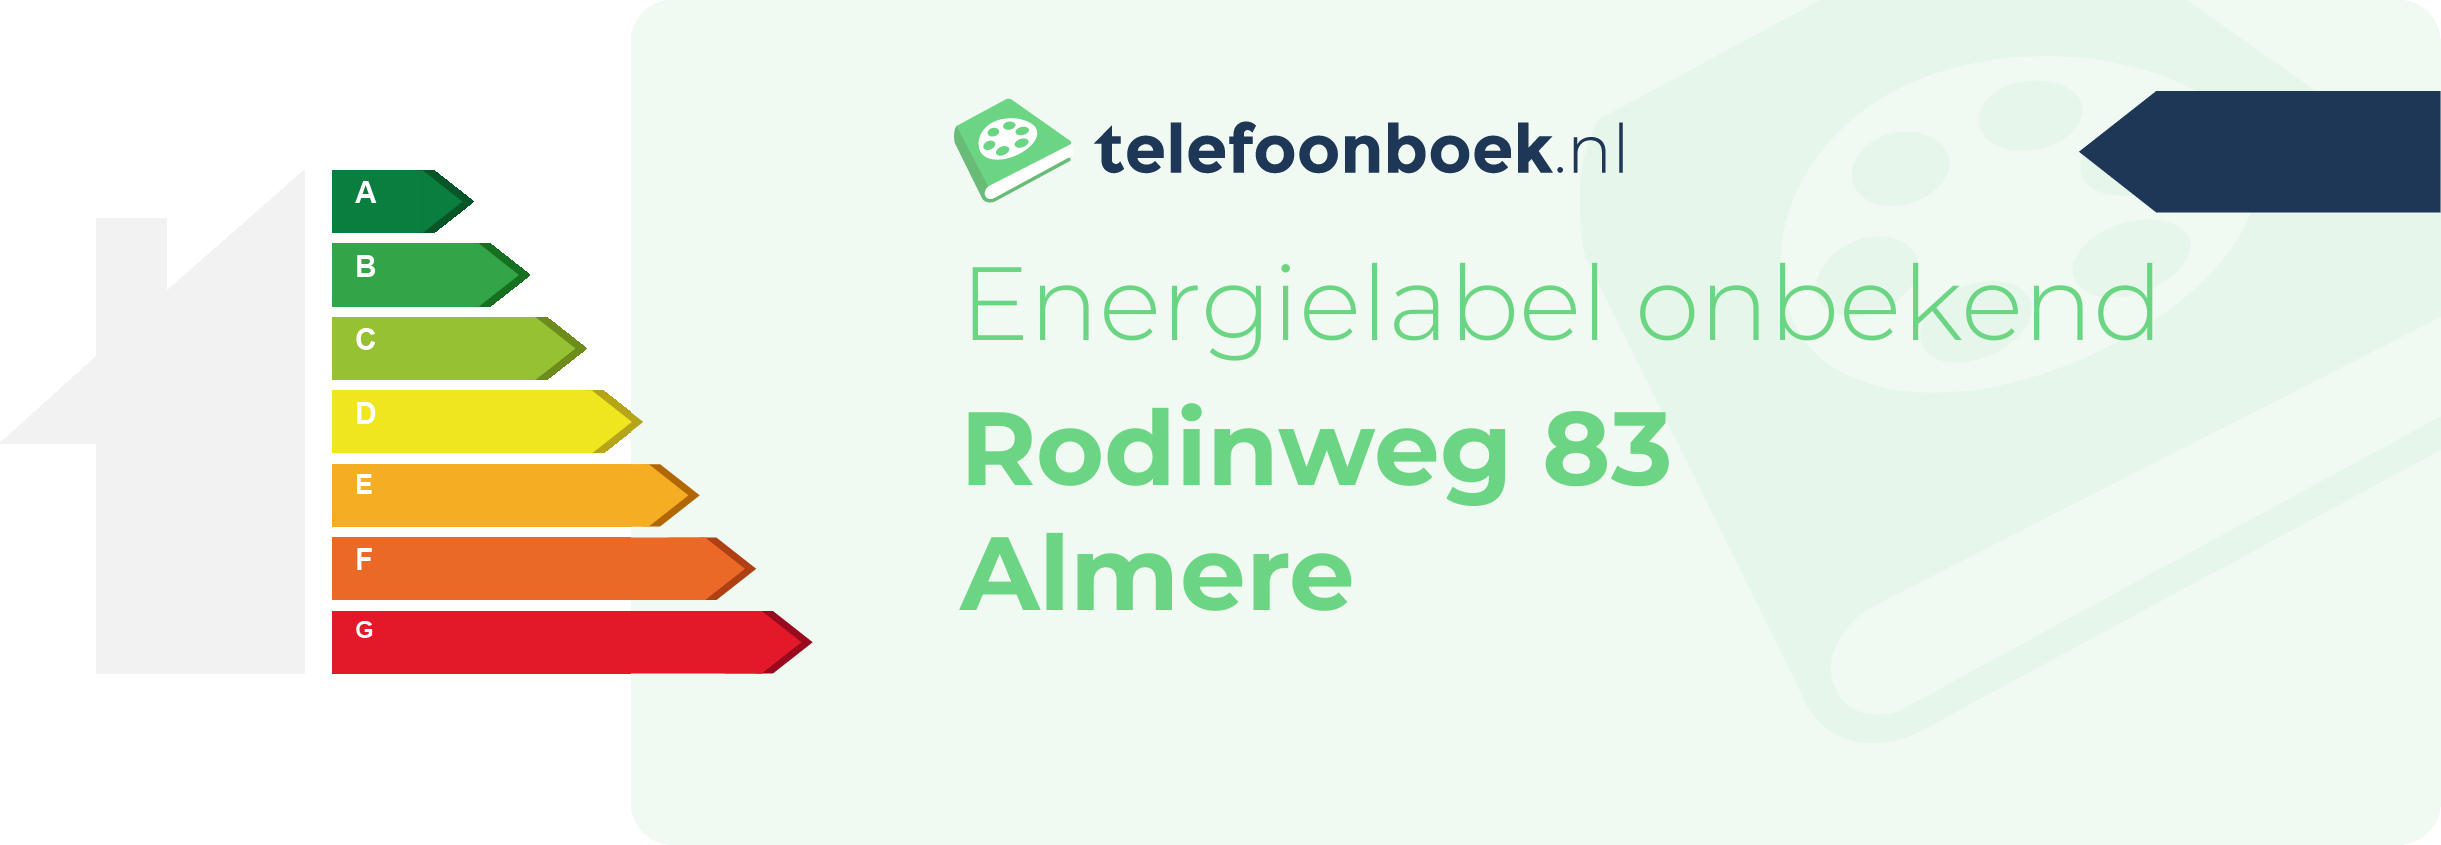 Energielabel Rodinweg 83 Almere